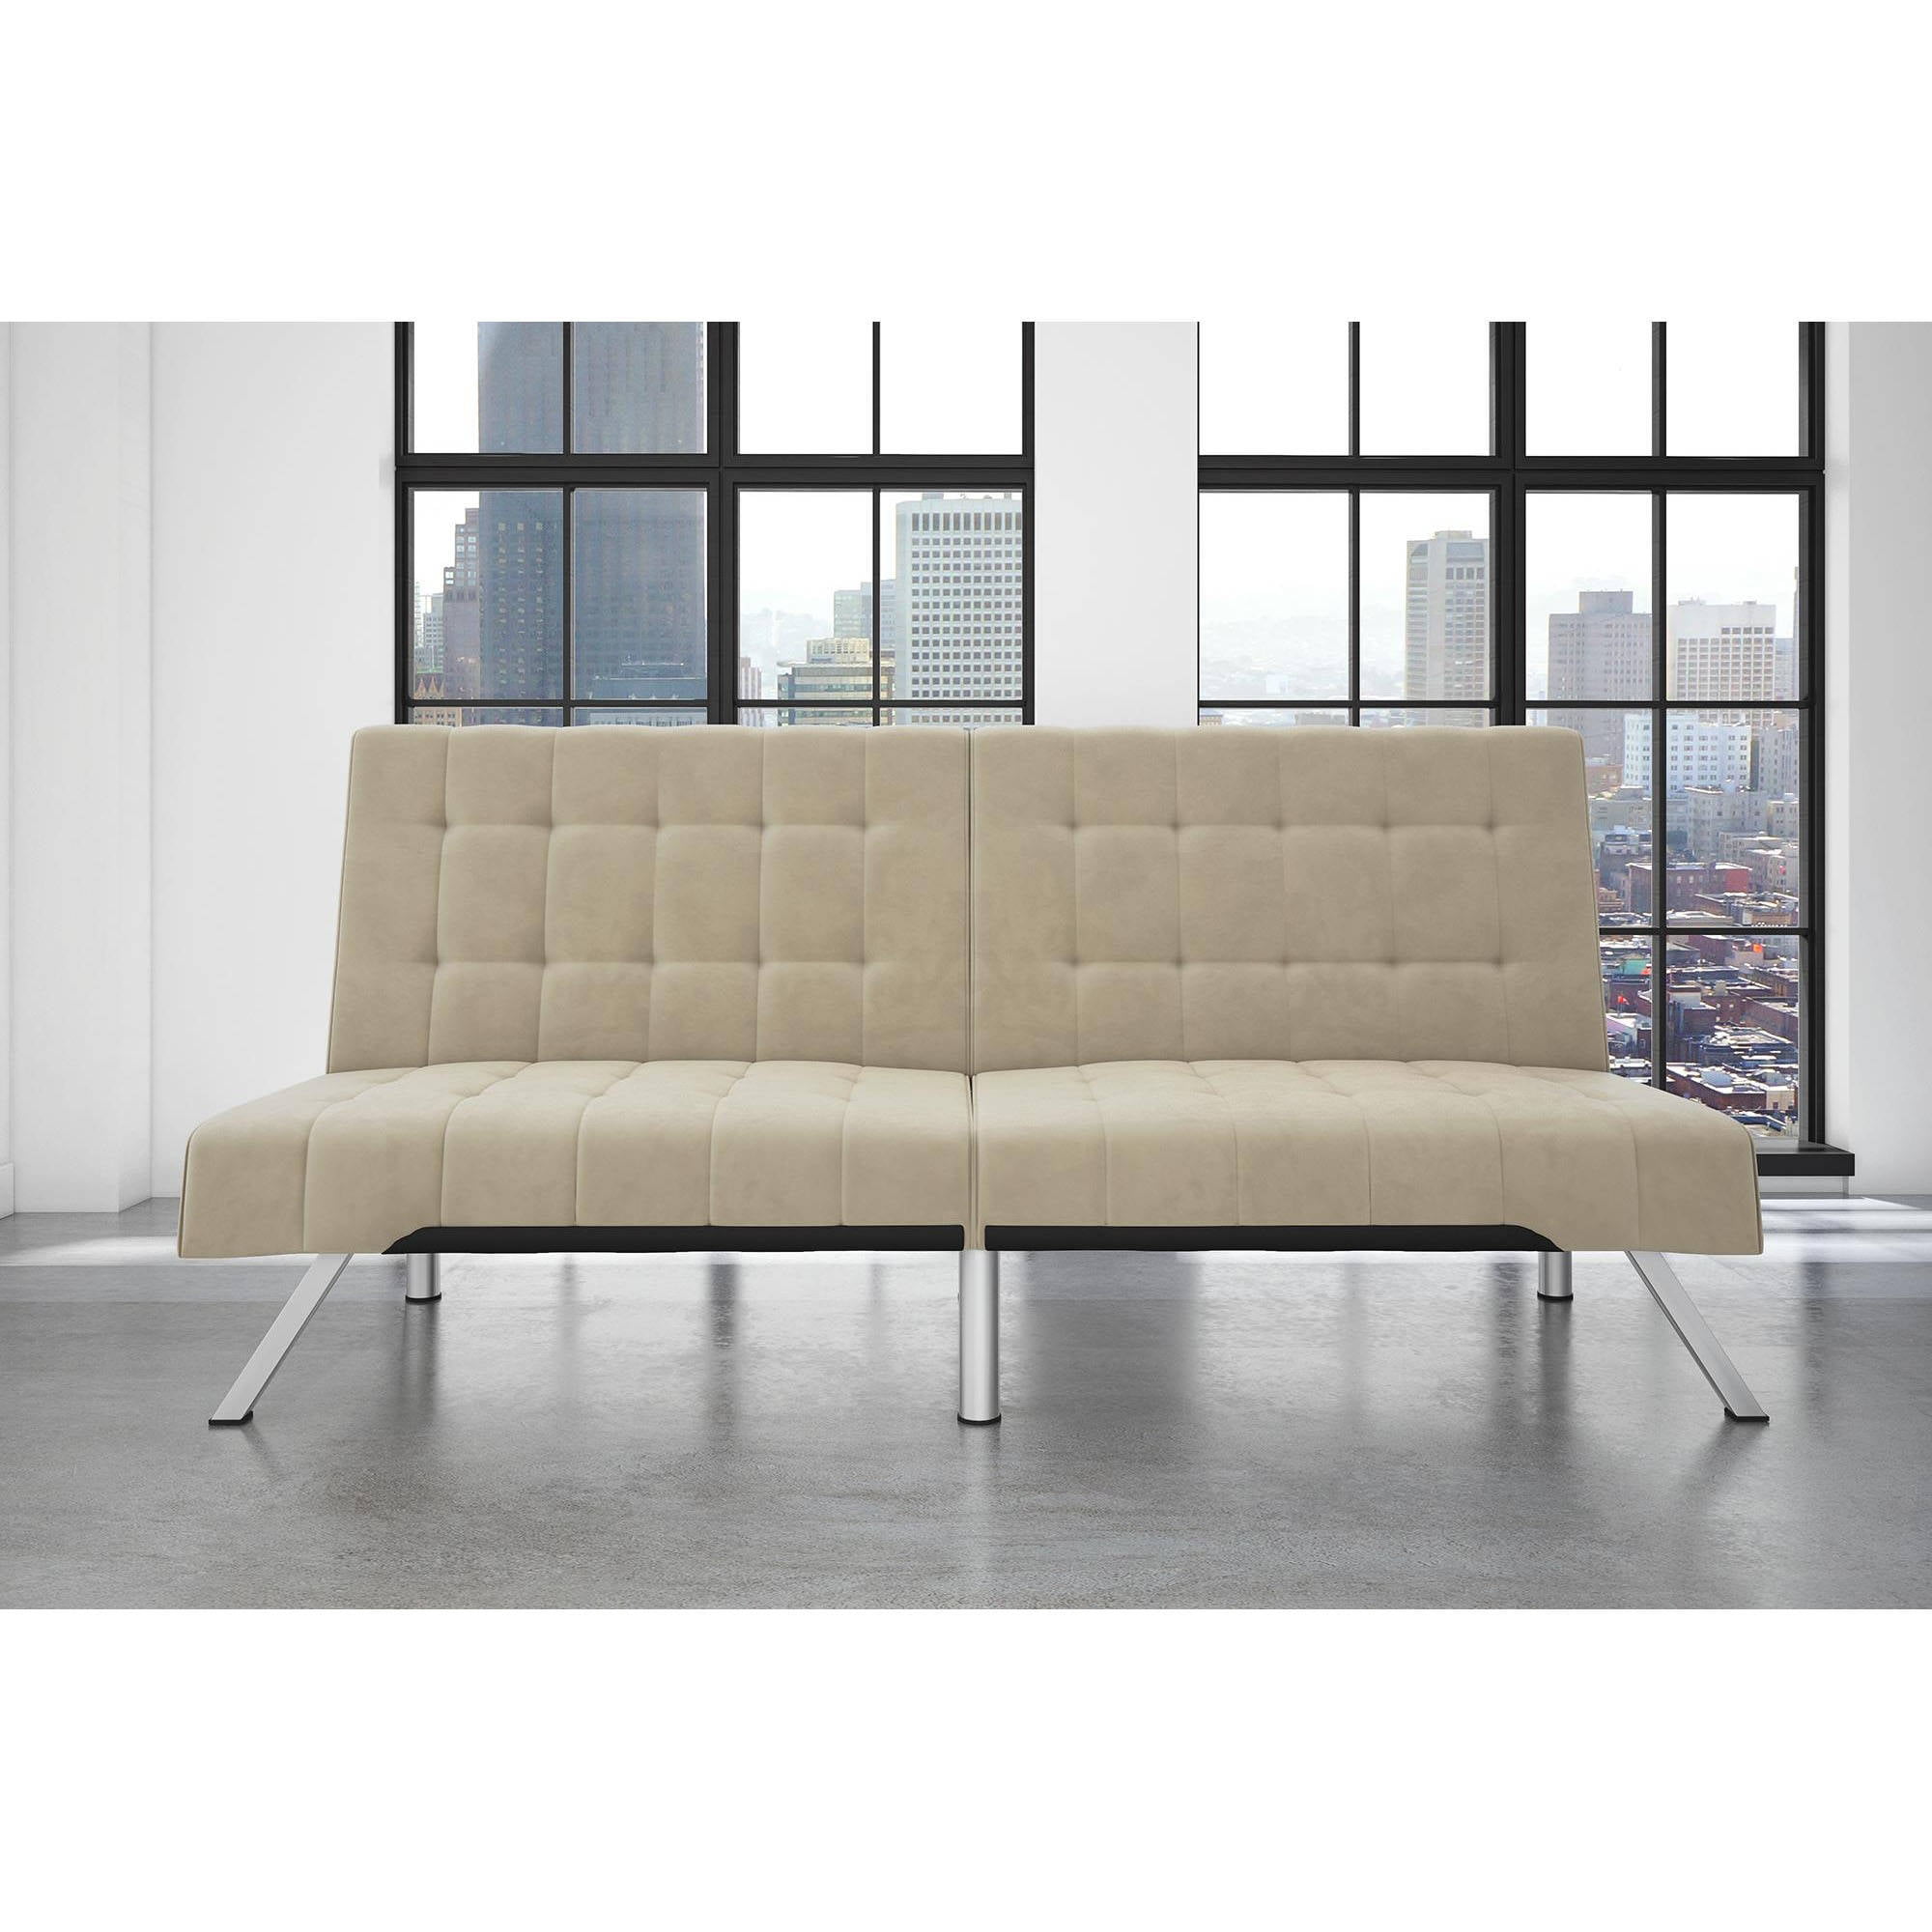 Dhp Emily Convertible Futon Sofa Couch, Dhp Emily Convertible Futon Sofa Couch Reviews